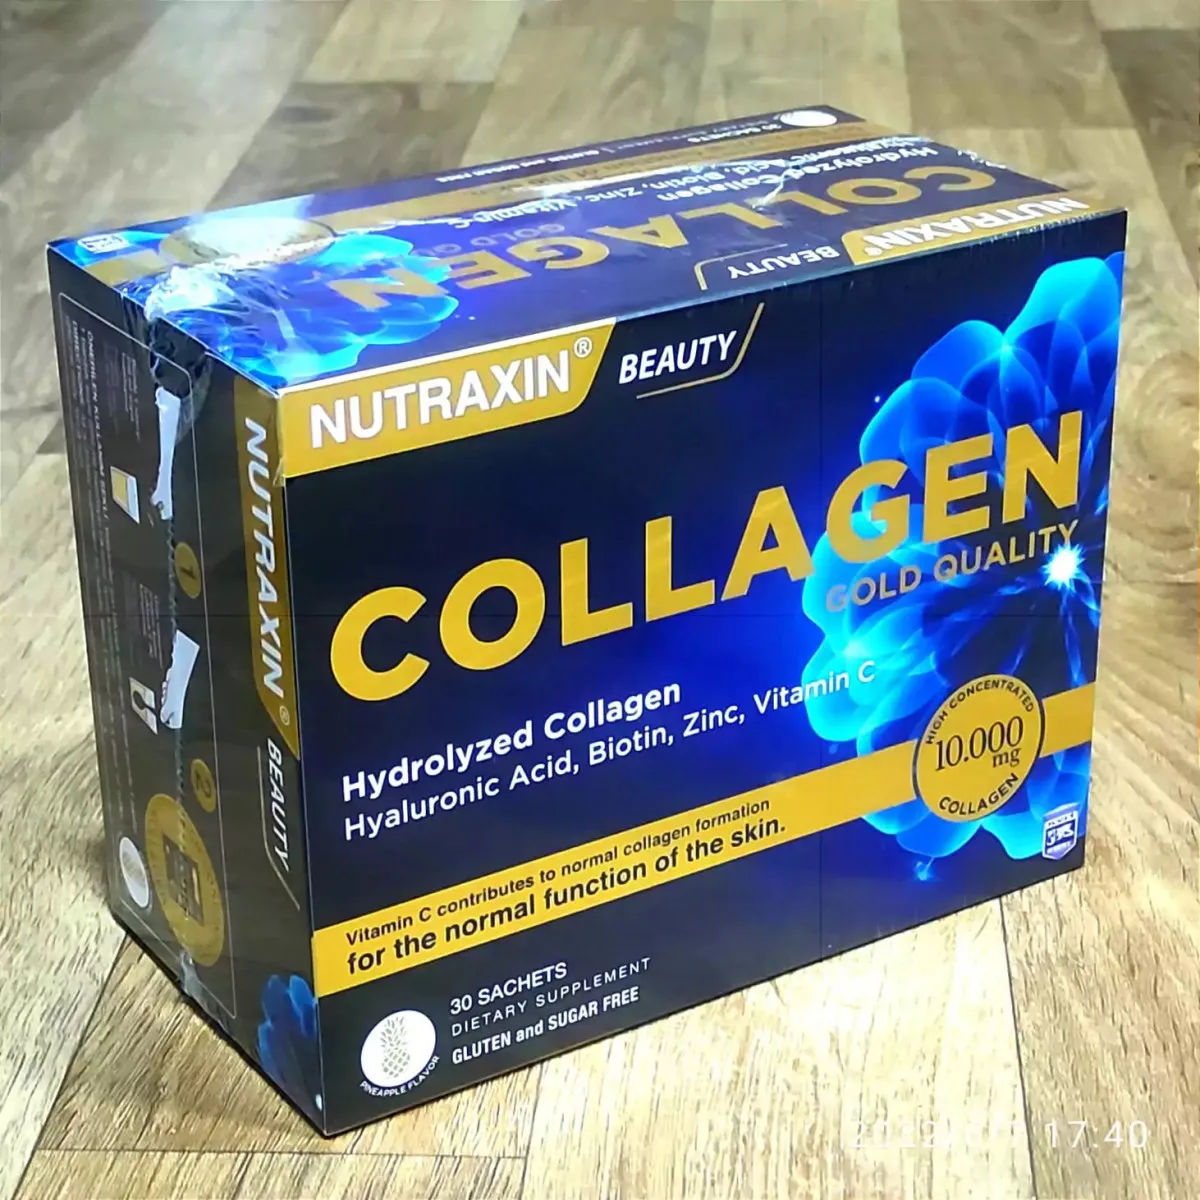 Nutraxin Collagen Gold sifatli parhez qo'shimchasi 30 ta paket#1